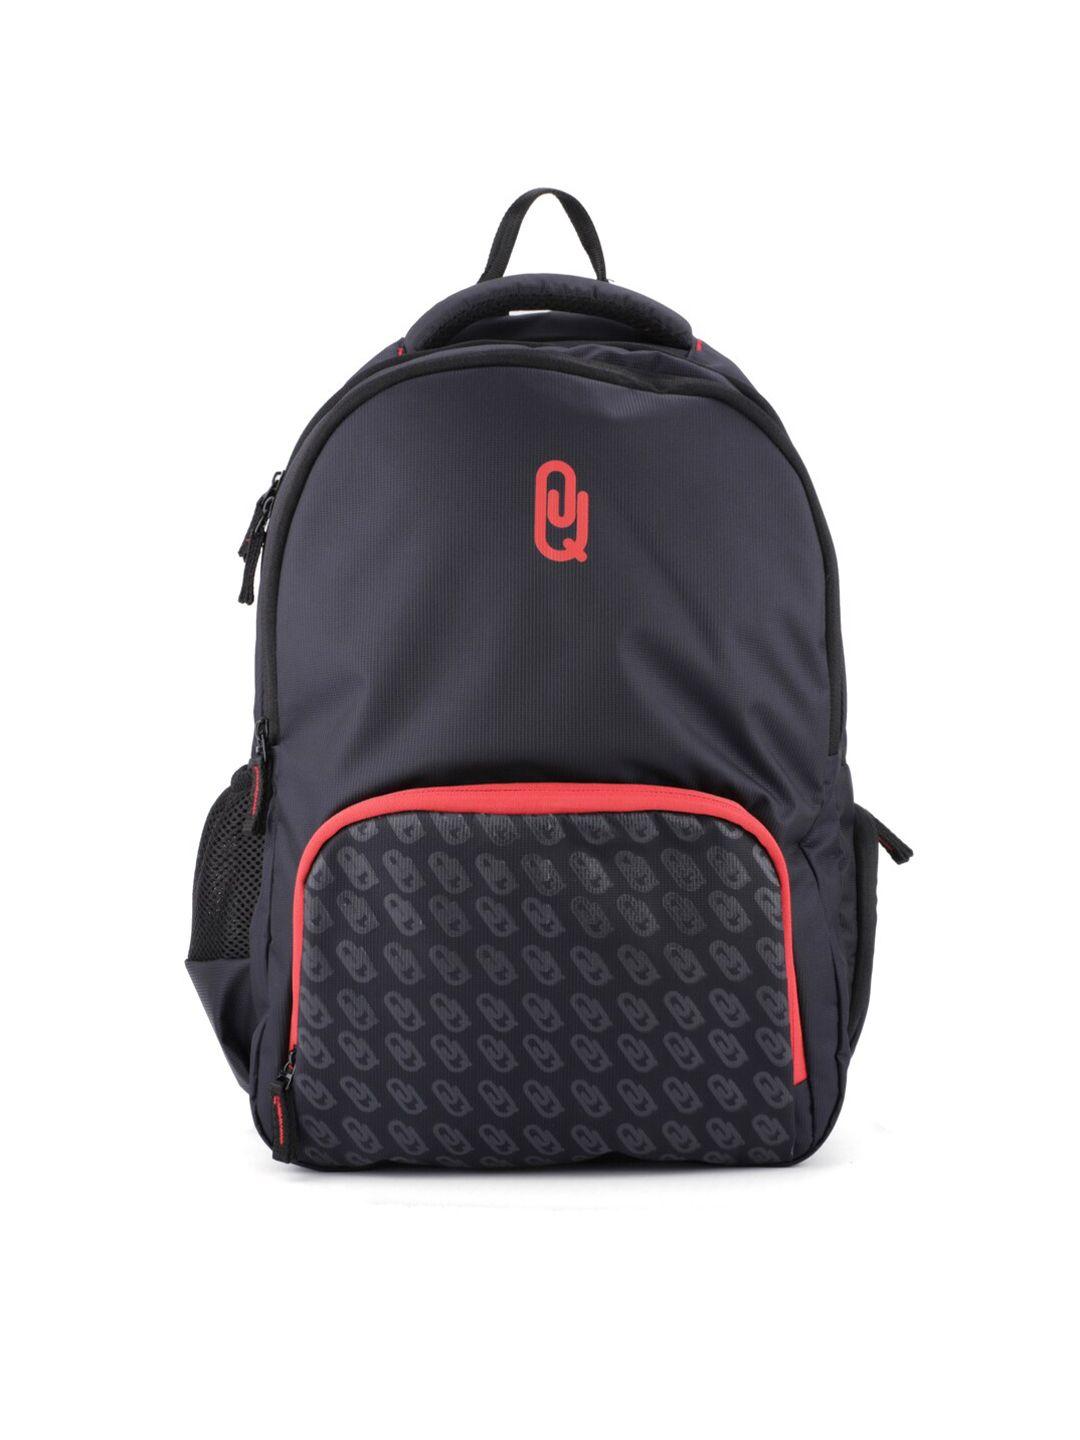 qips unisex navy blue brand logo backpack